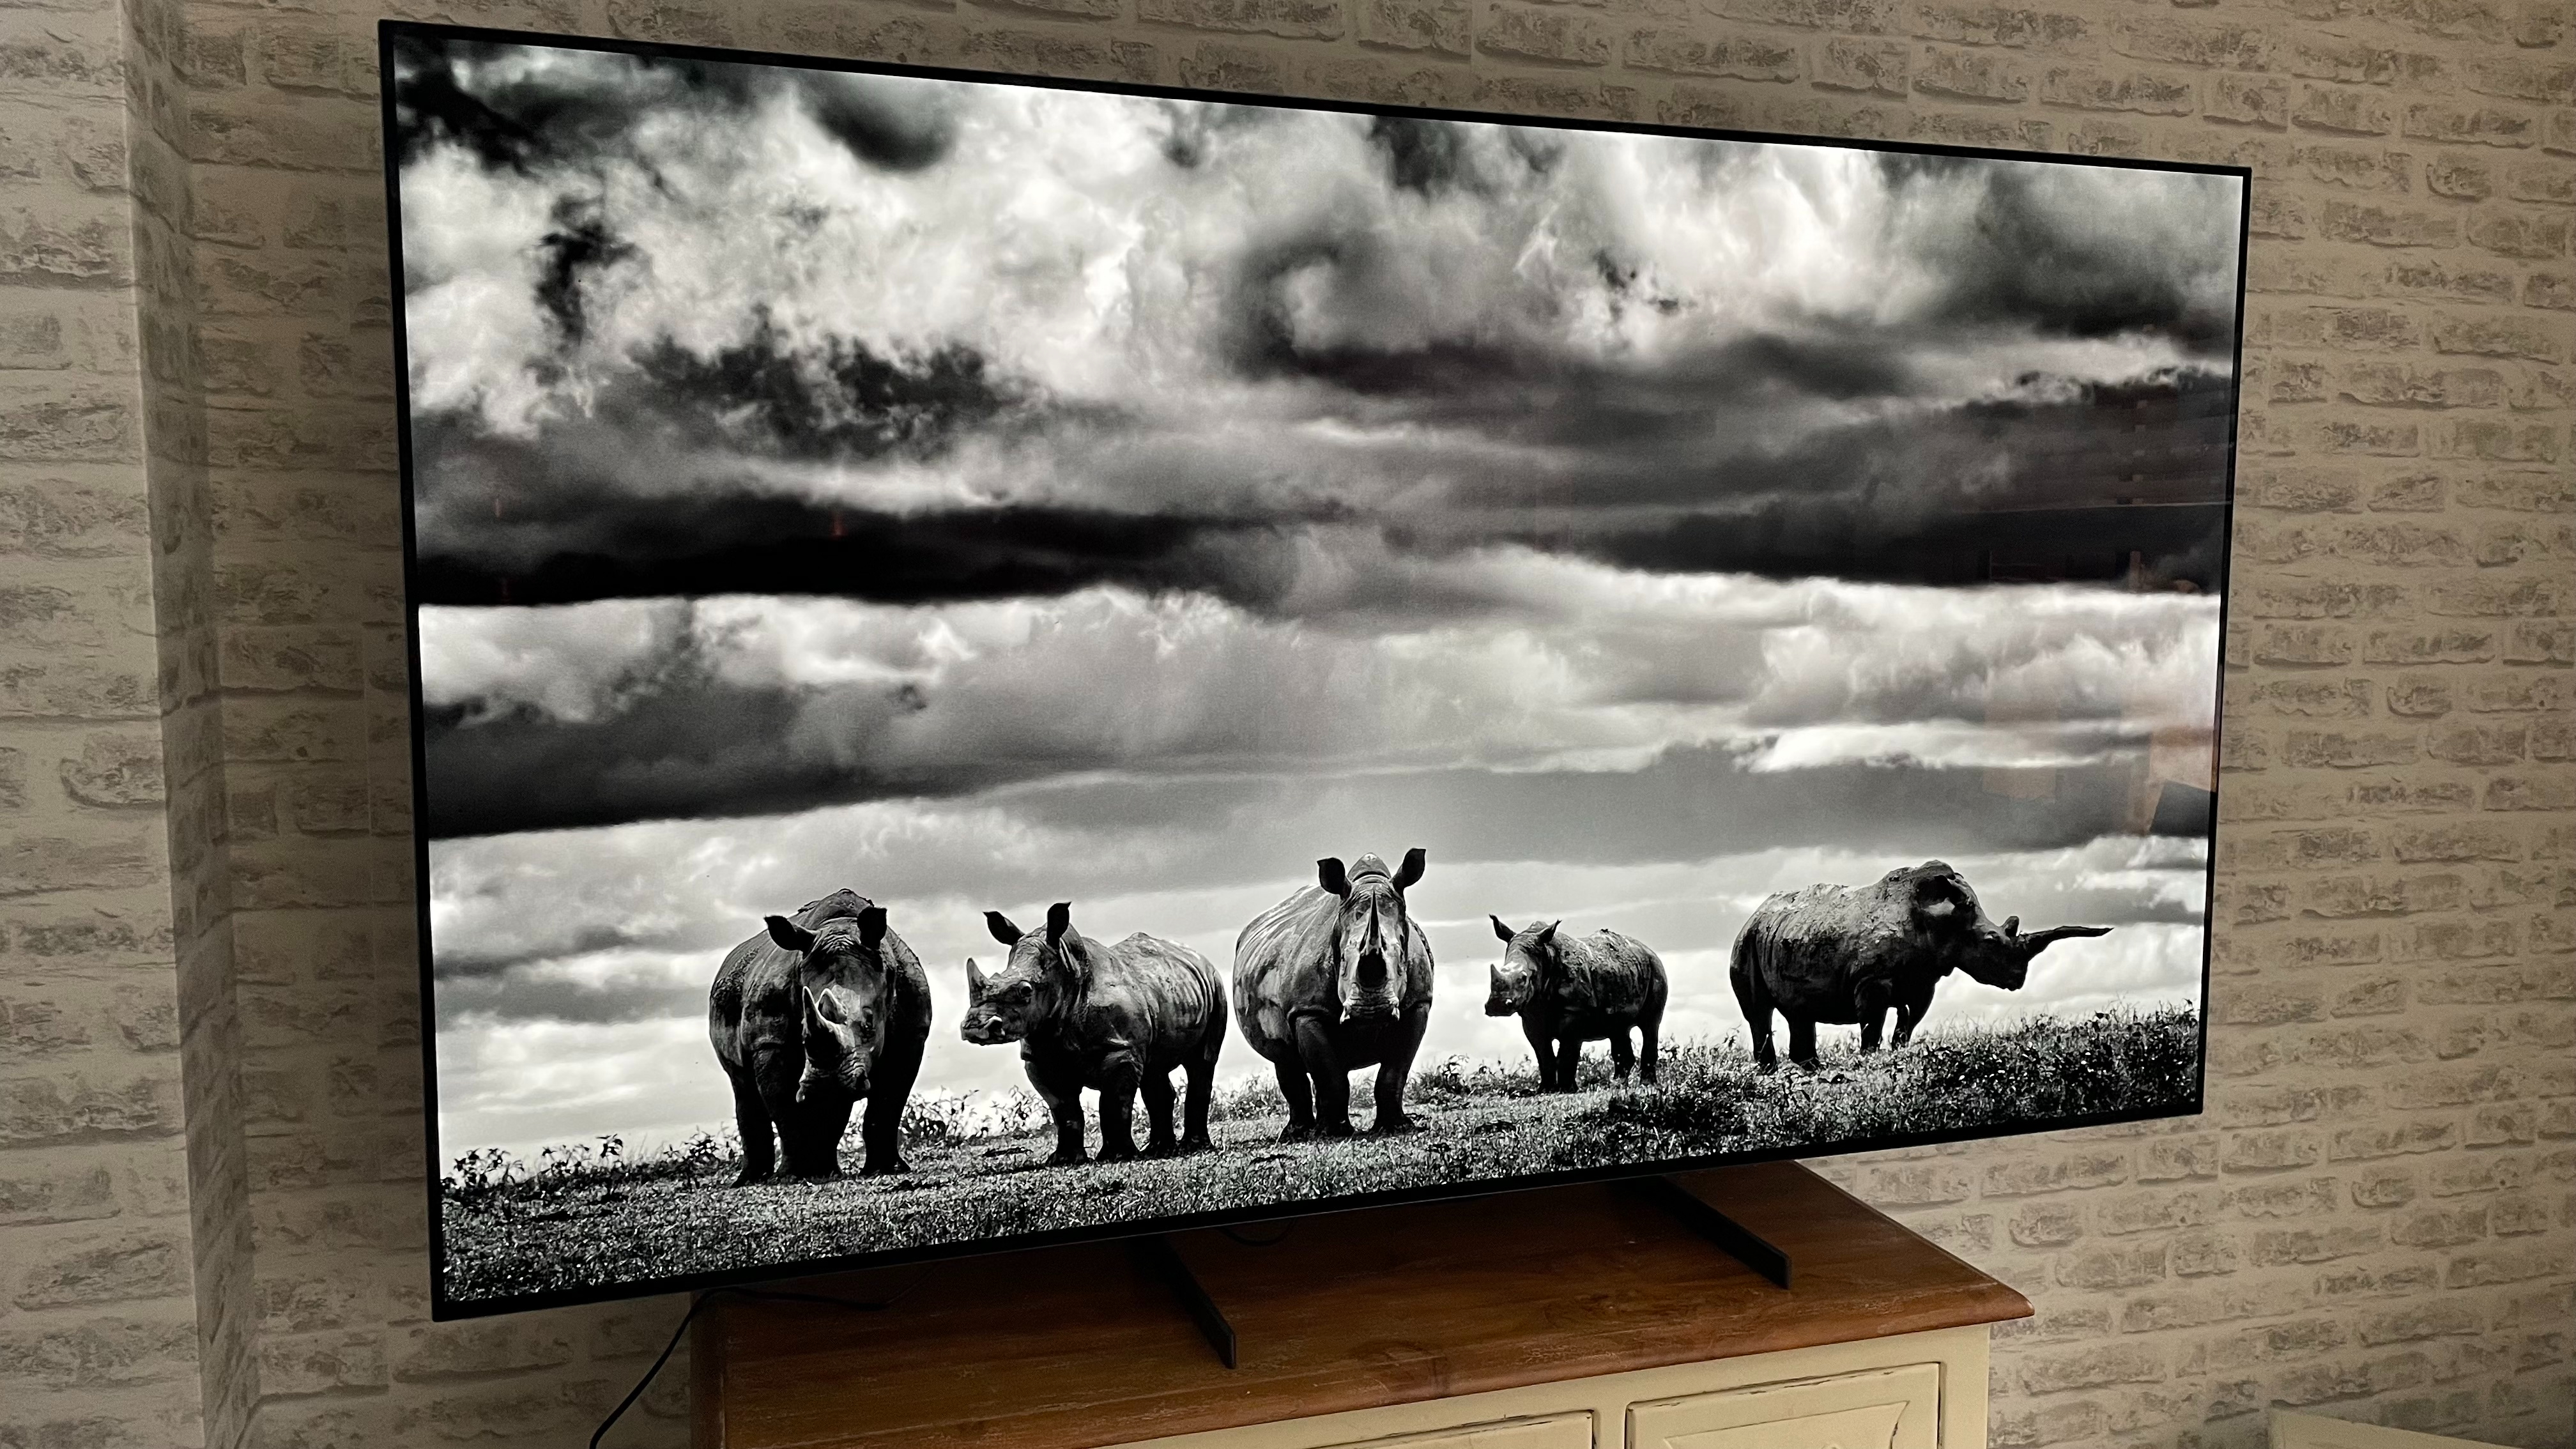 LG Z3 OLED TV showing black and white image